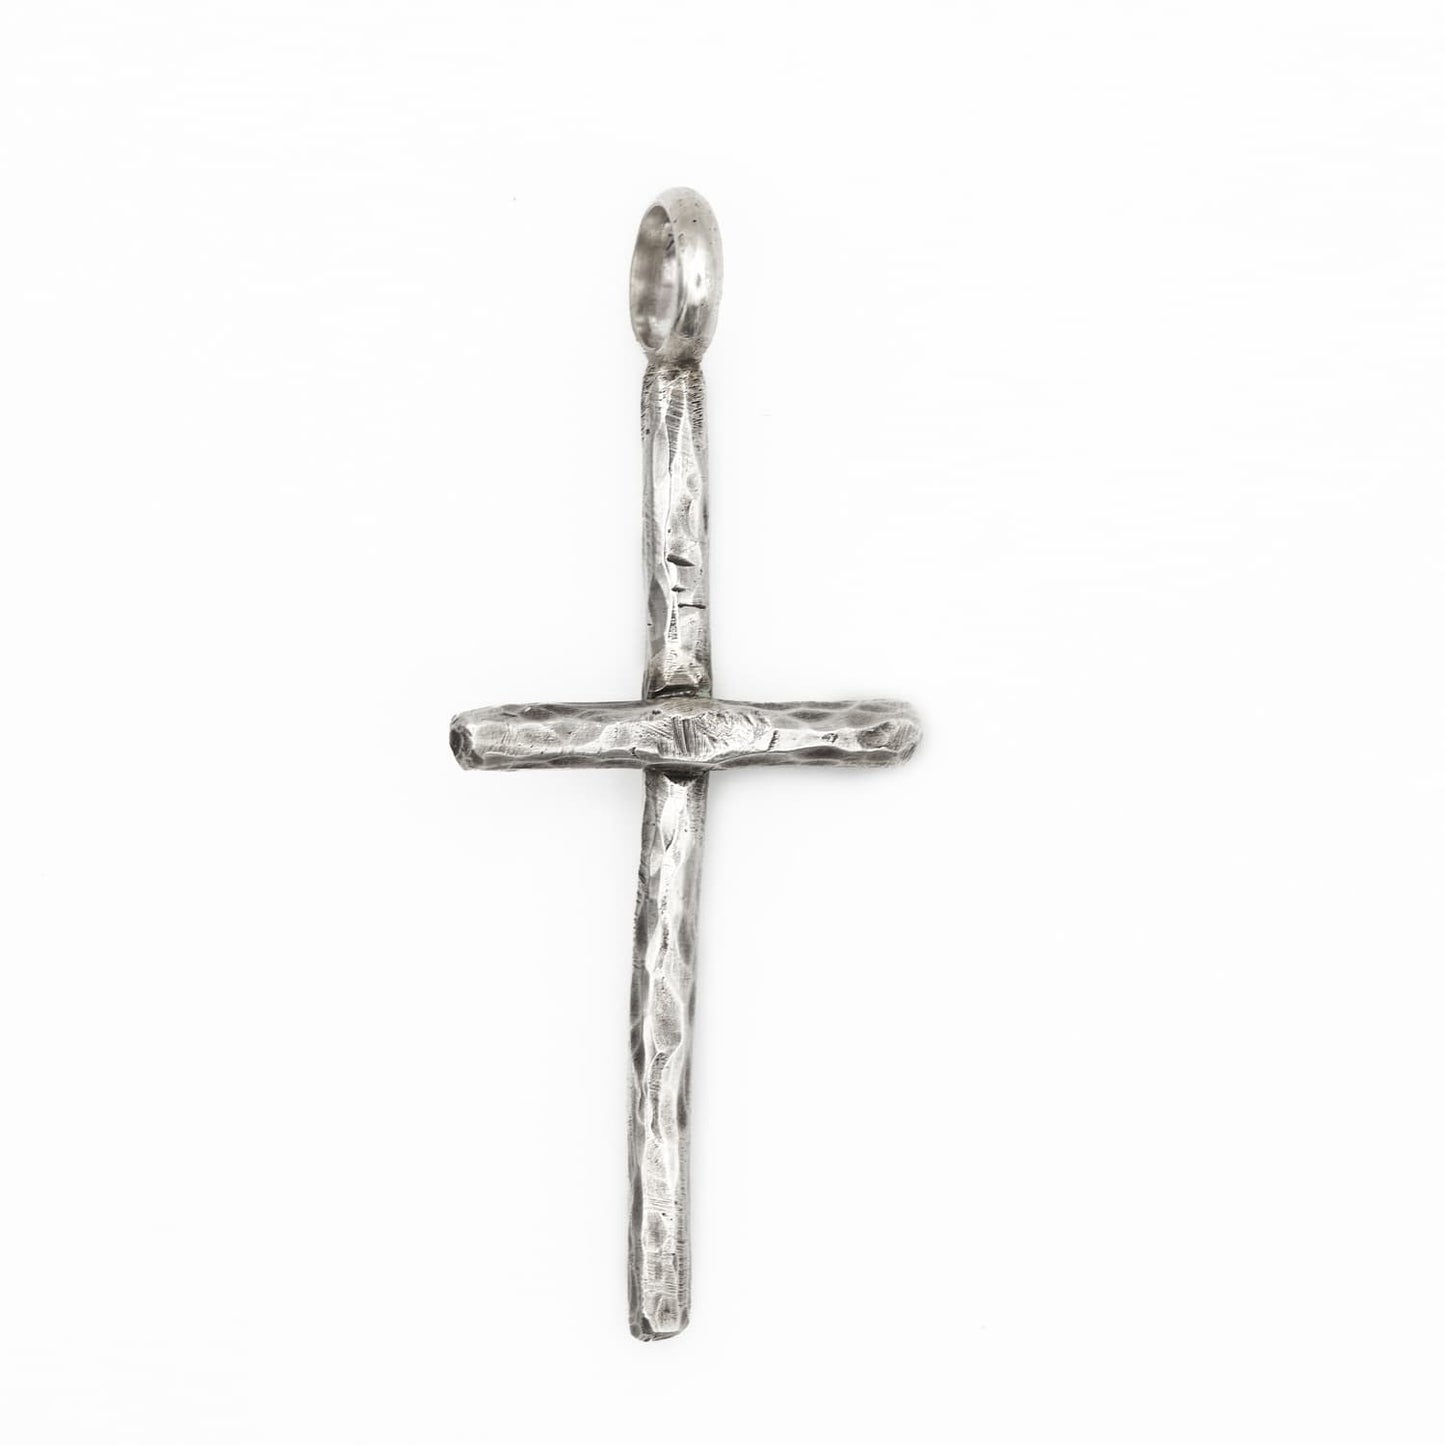 Kreuz aus Sterling Silber - Anhänger für Halskette - massiv geschmiedet - Silberschmied